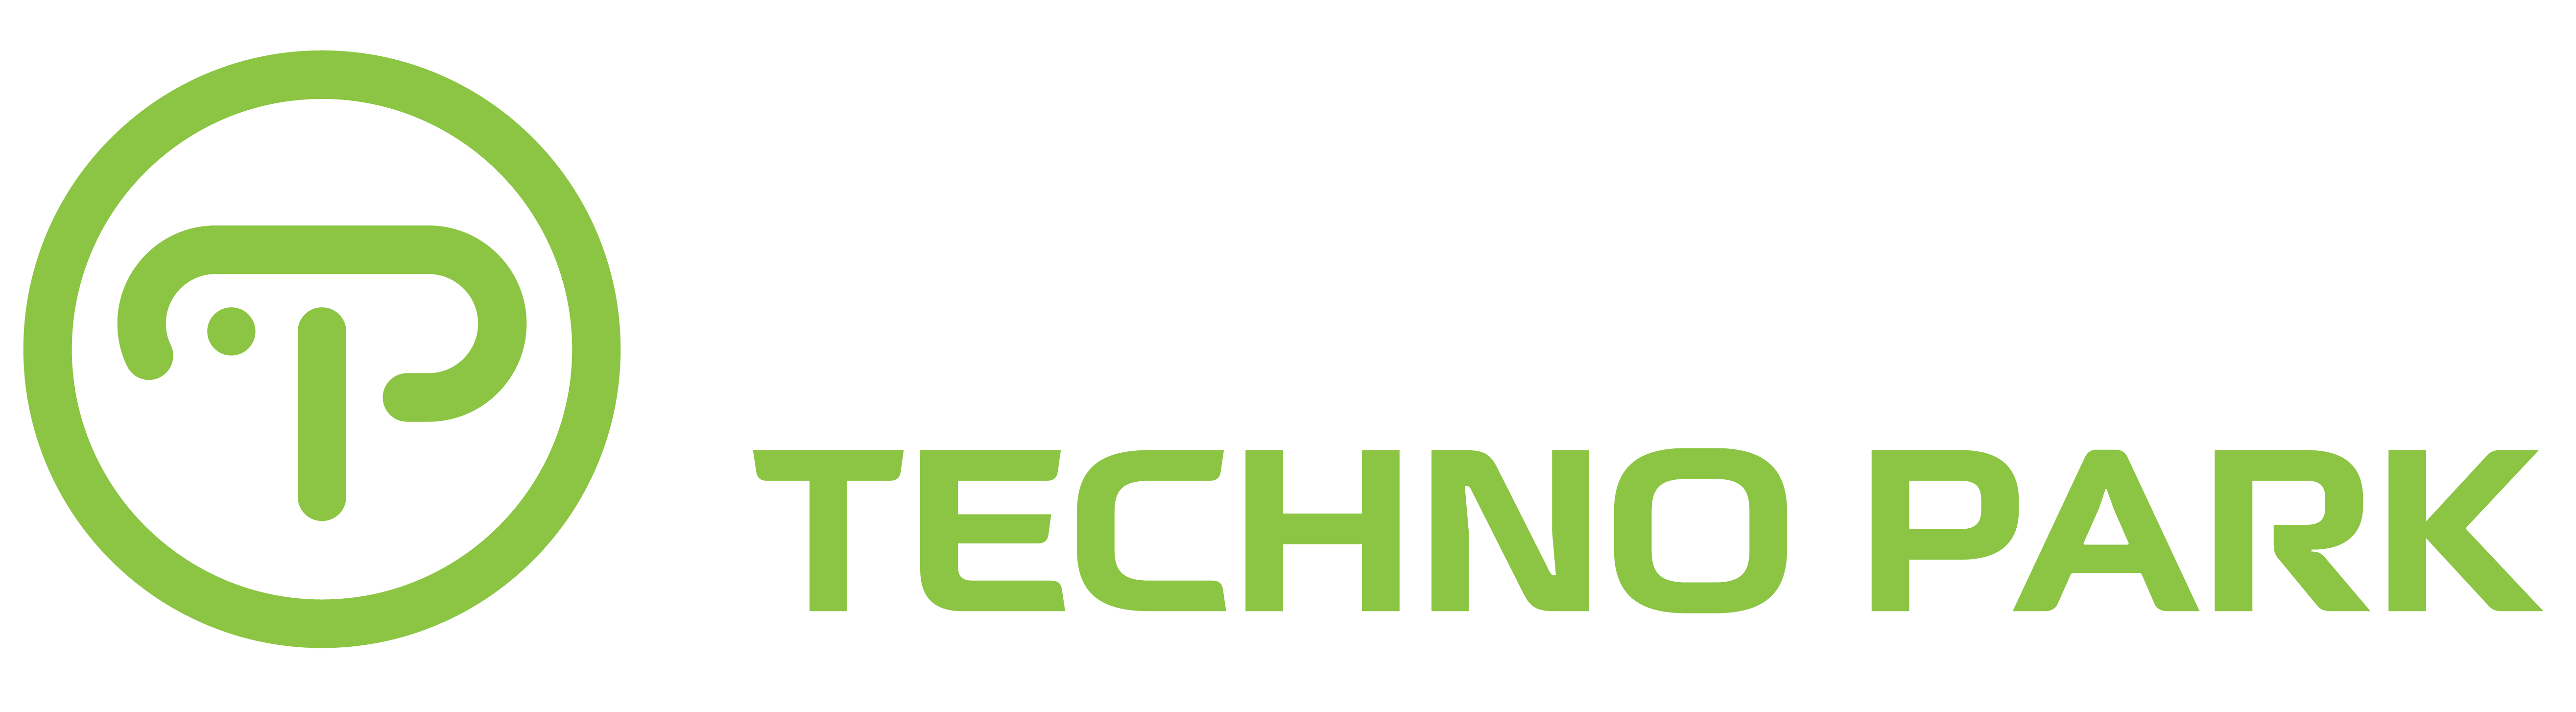 TECHNO PARK logo 2-01